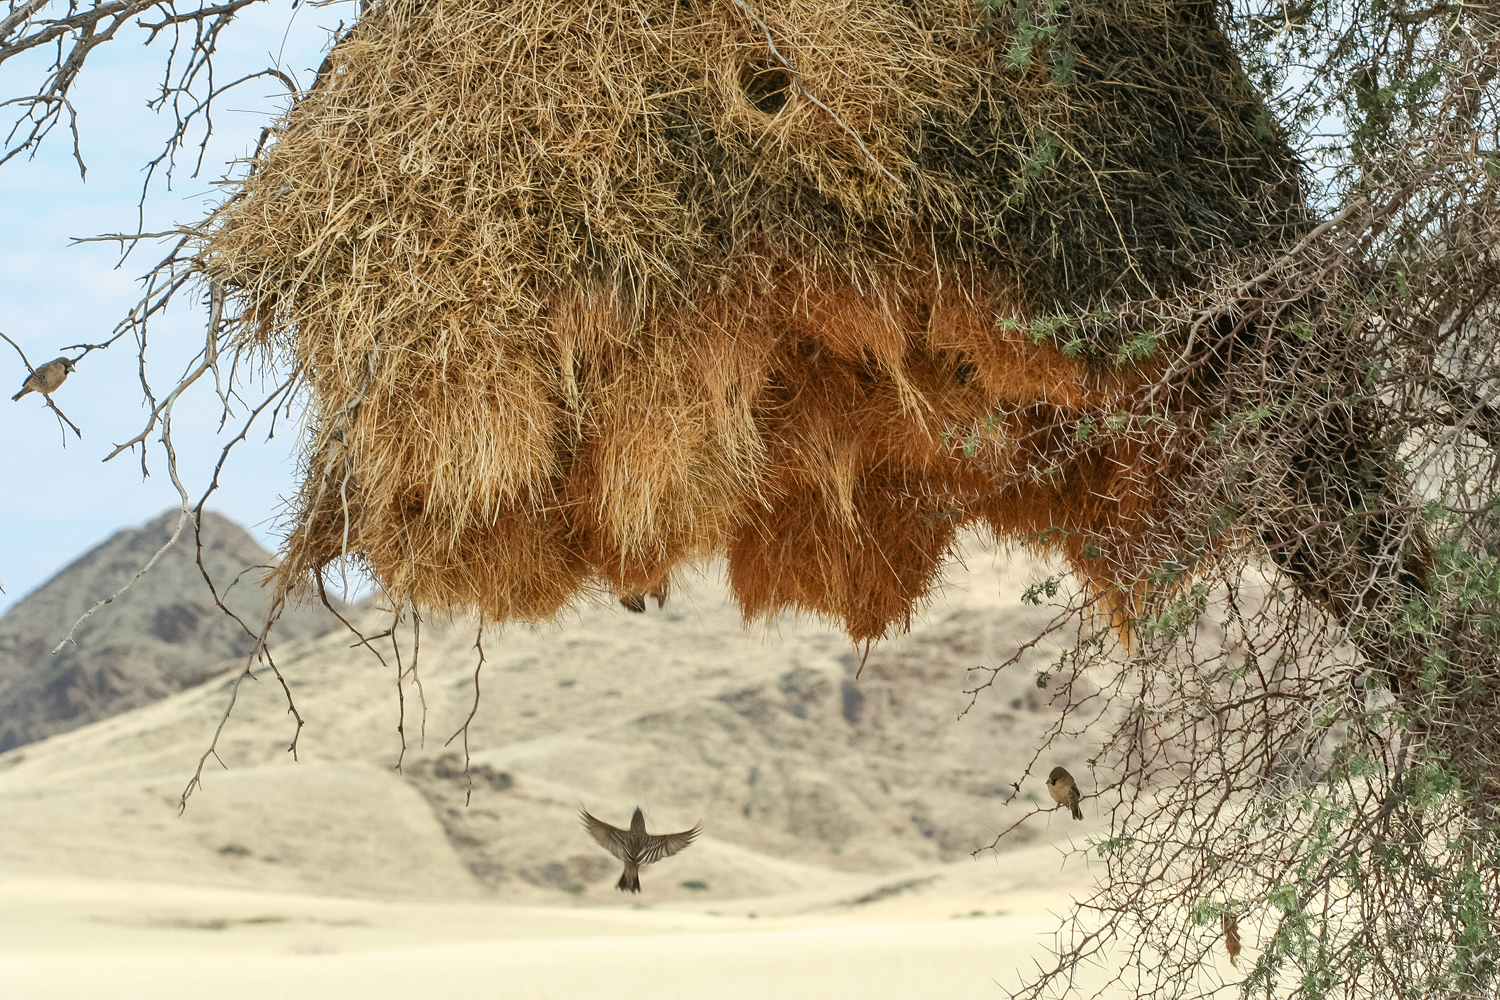  A sociable weaver nest in the Namib-Naukluft National Park